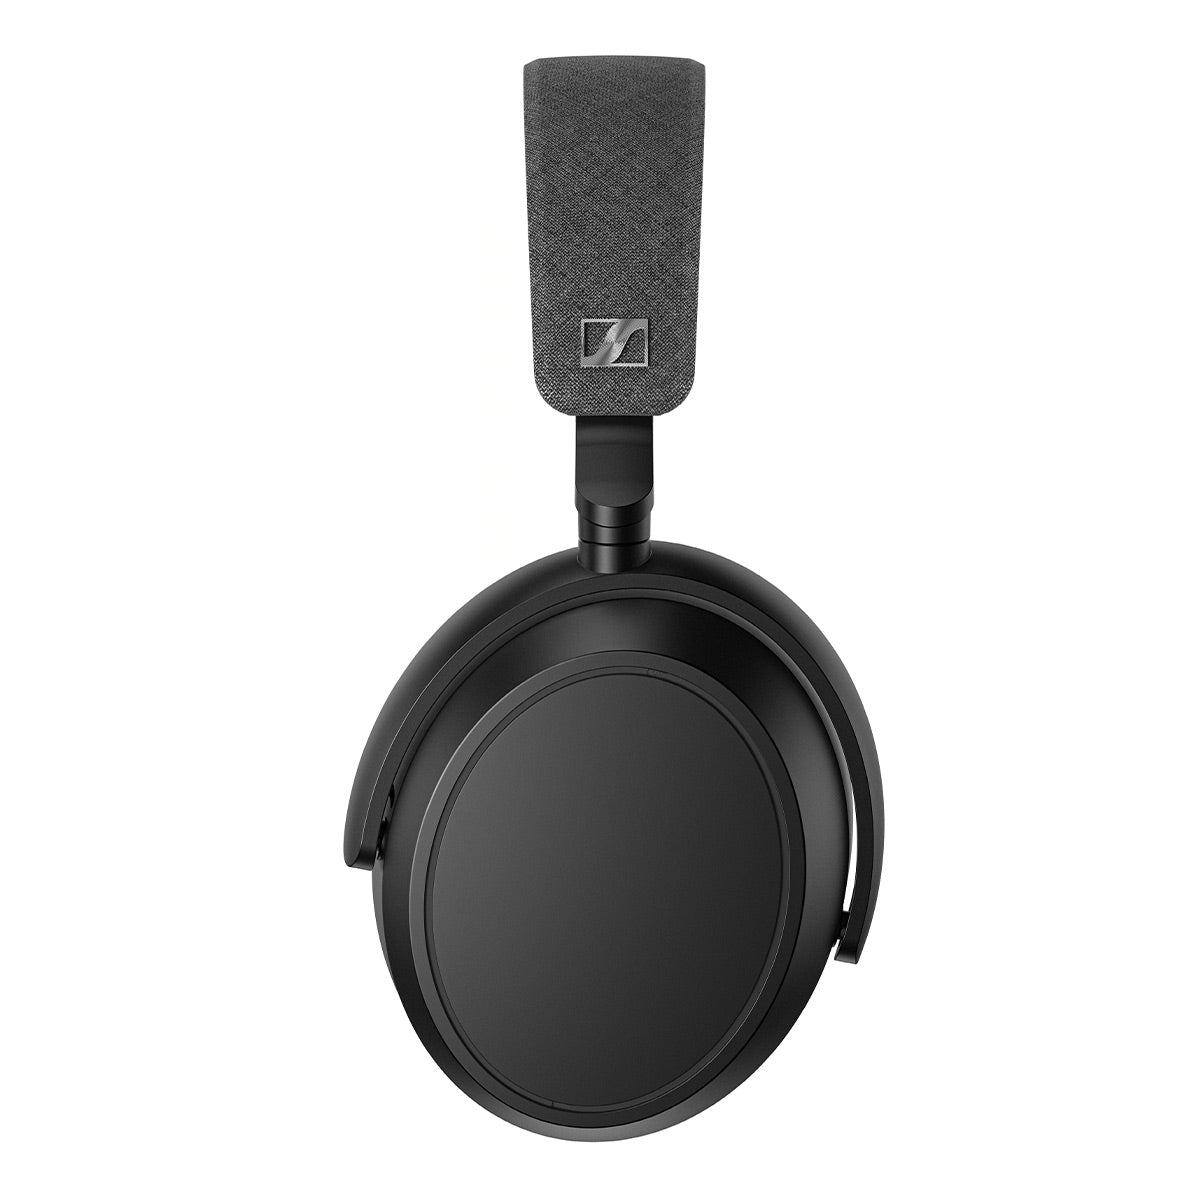 Sennheiser MOMENTUM 4 Wireless Bluetooth Over-Ear Headphones with Adaptive Noise Cancellation (Black)